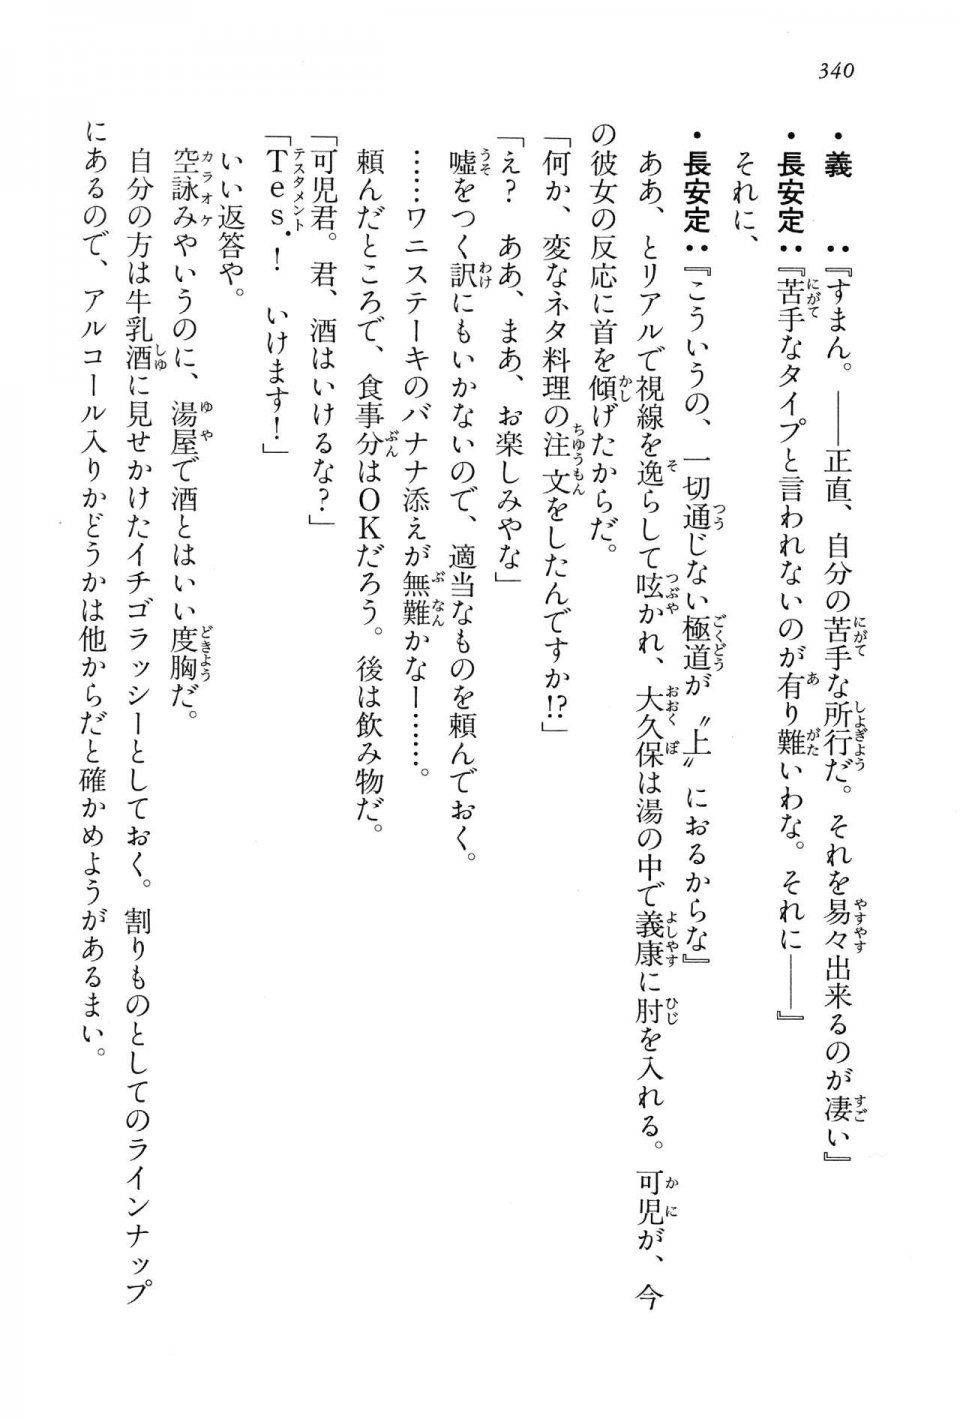 Kyoukai Senjou no Horizon LN Vol 15(6C) Part 1 - Photo #340